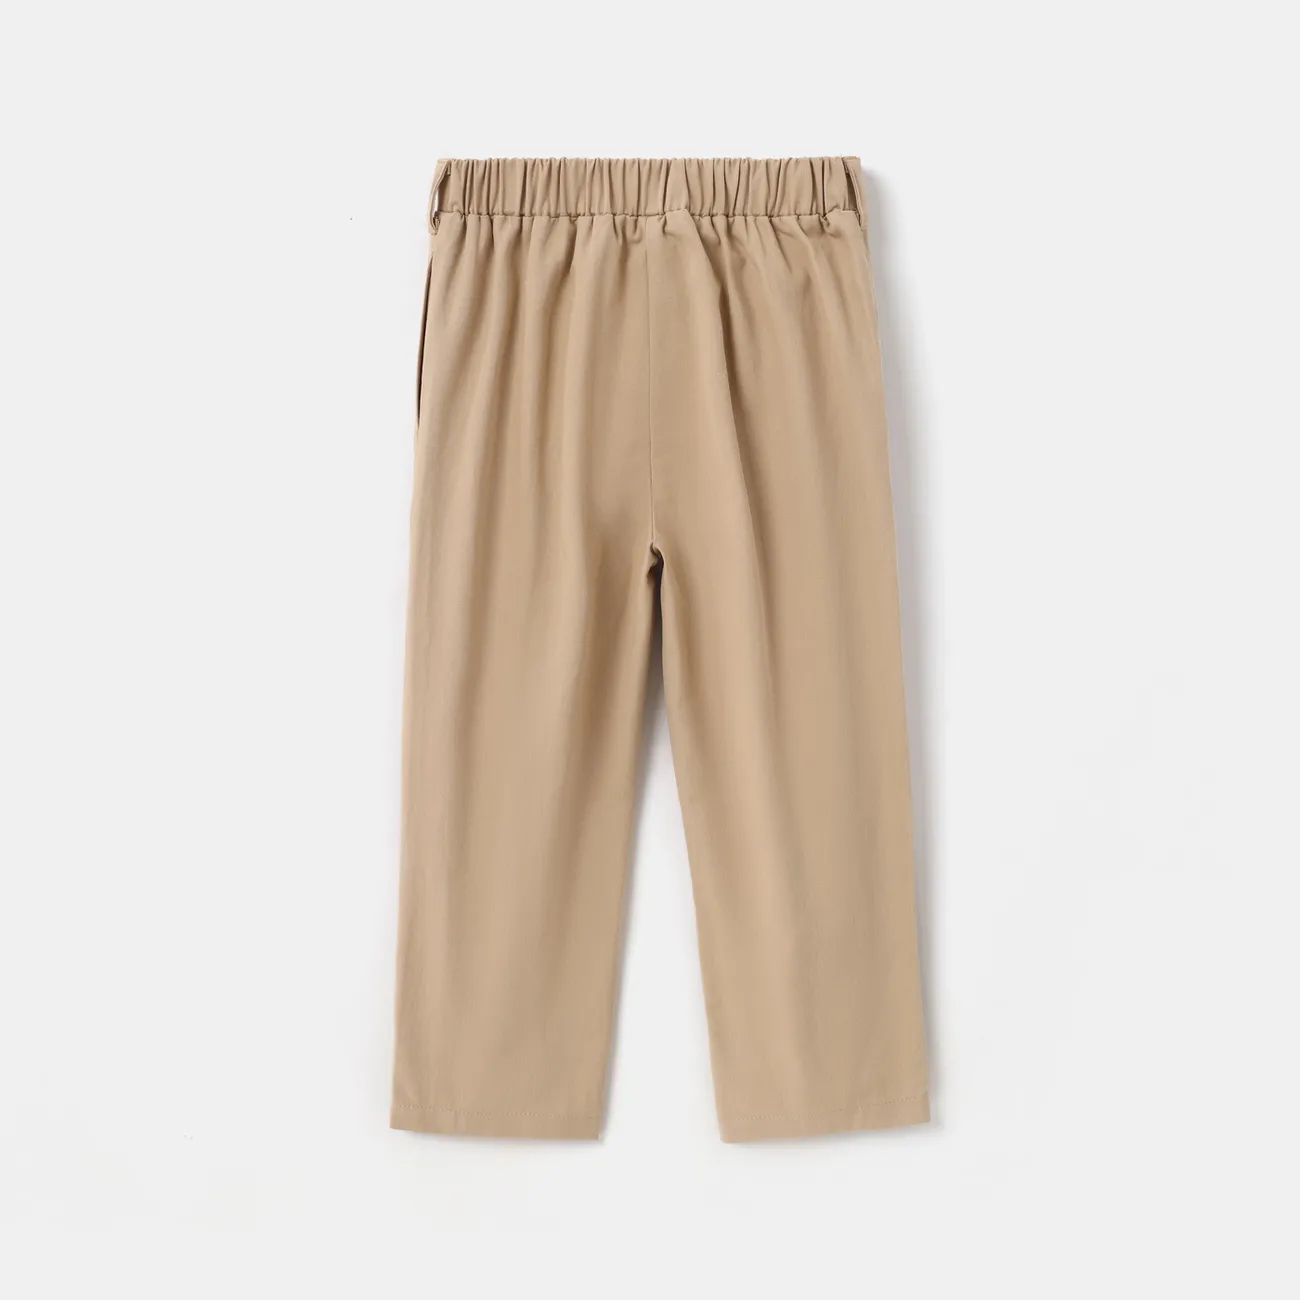 Toddler Boy 100% Cotton School Uniform Casual Pants Khaki big image 1